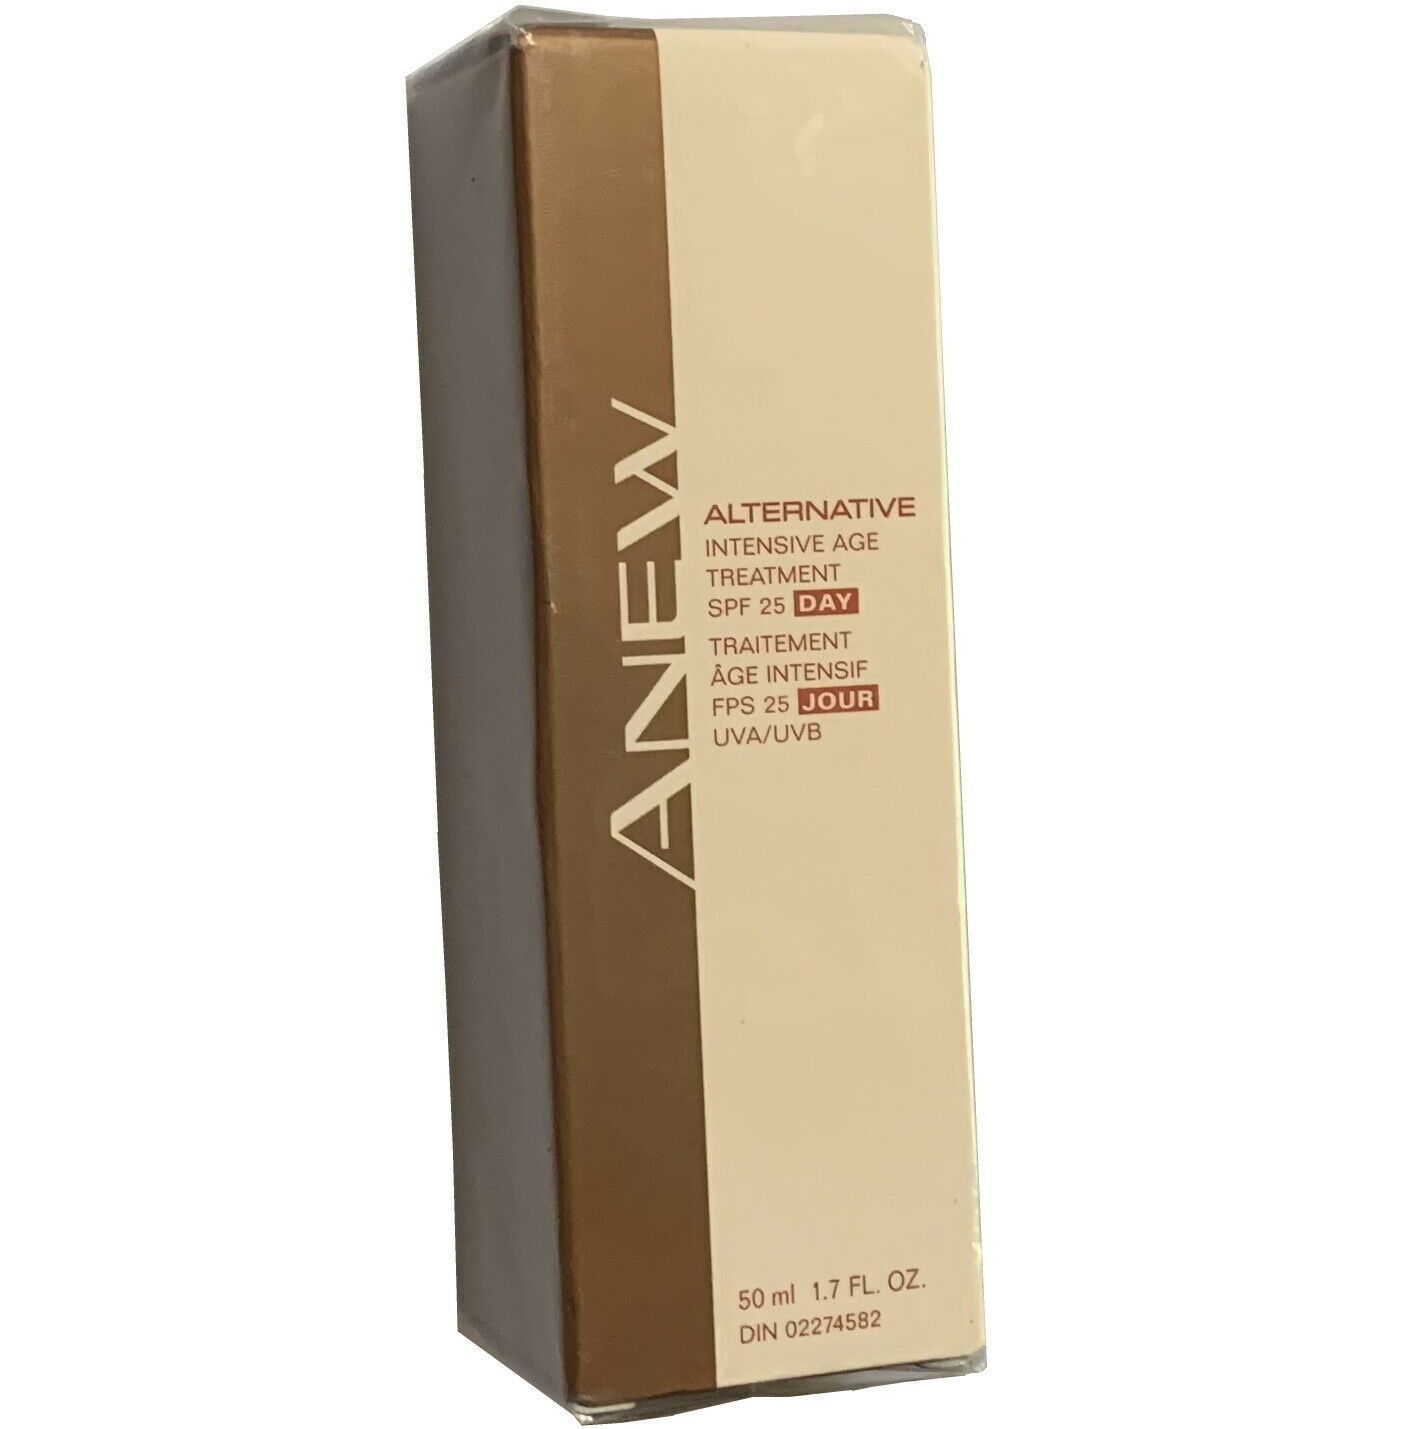 New Sealed Avon Anew Alternative Intensive Age Day SPF 25 Face Cream  1.7 Oz - $29.99